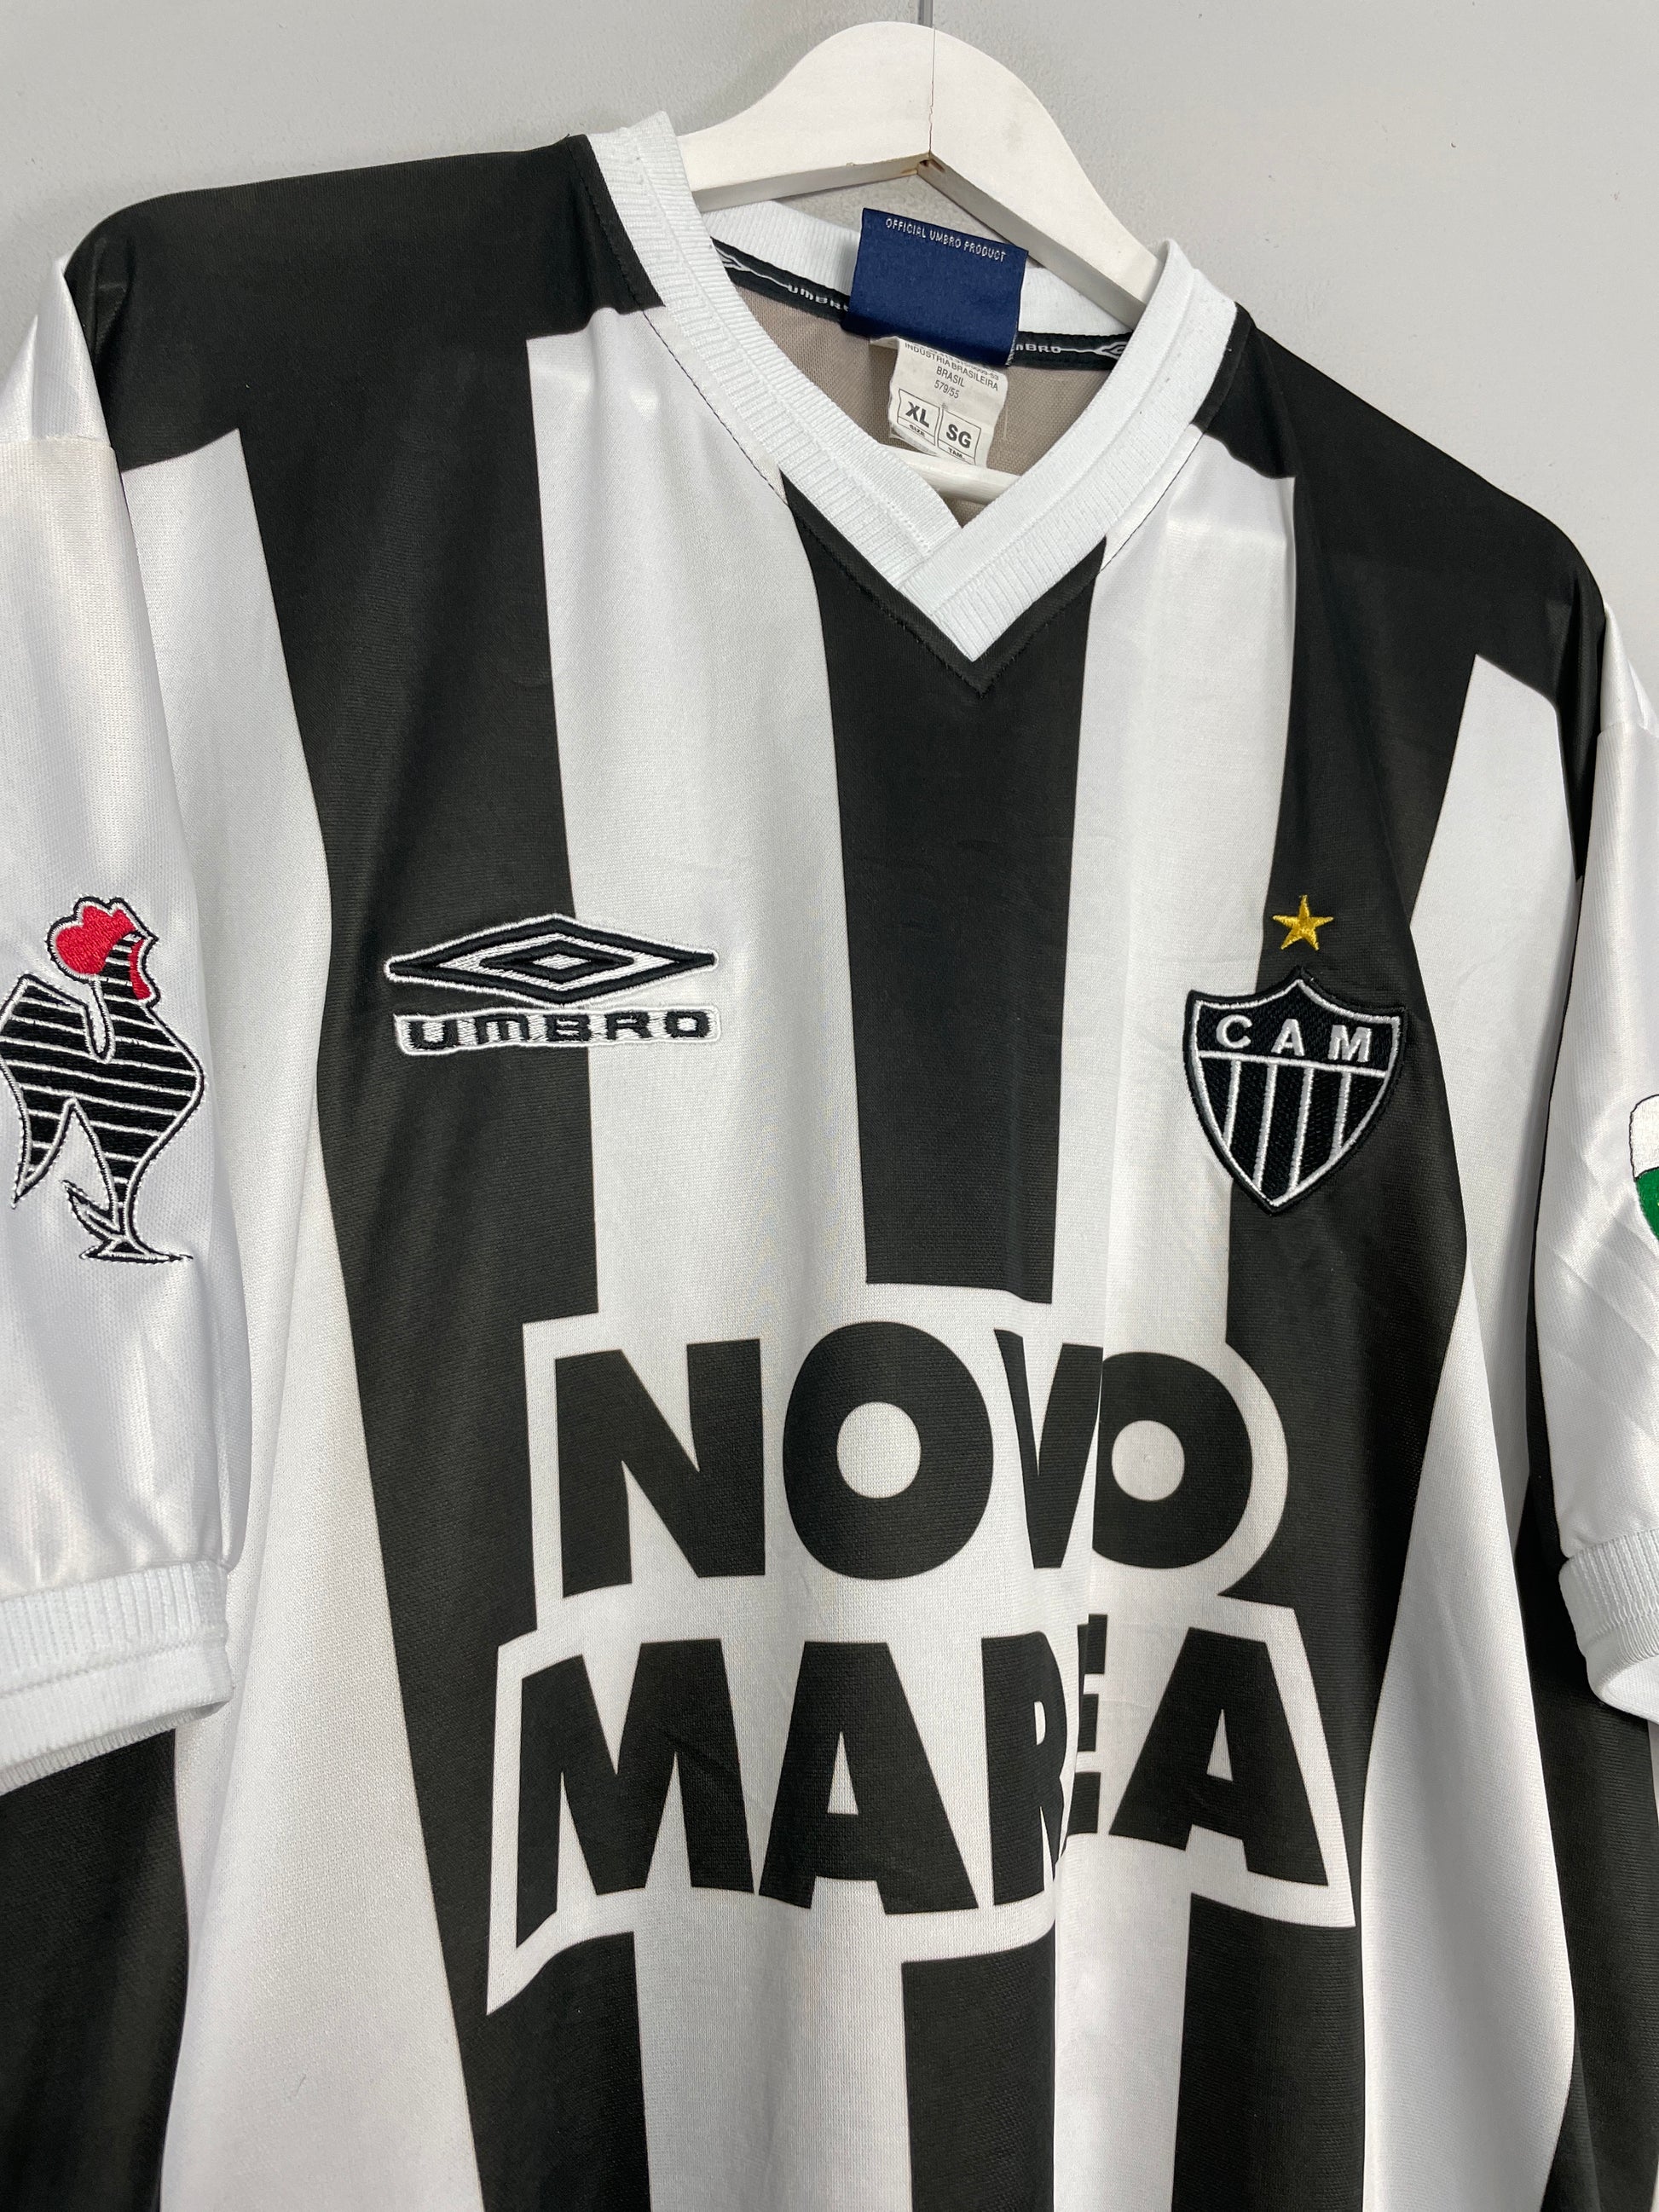 Atletico Mineiro Jersey Atlético Mineiro Jersey on sale